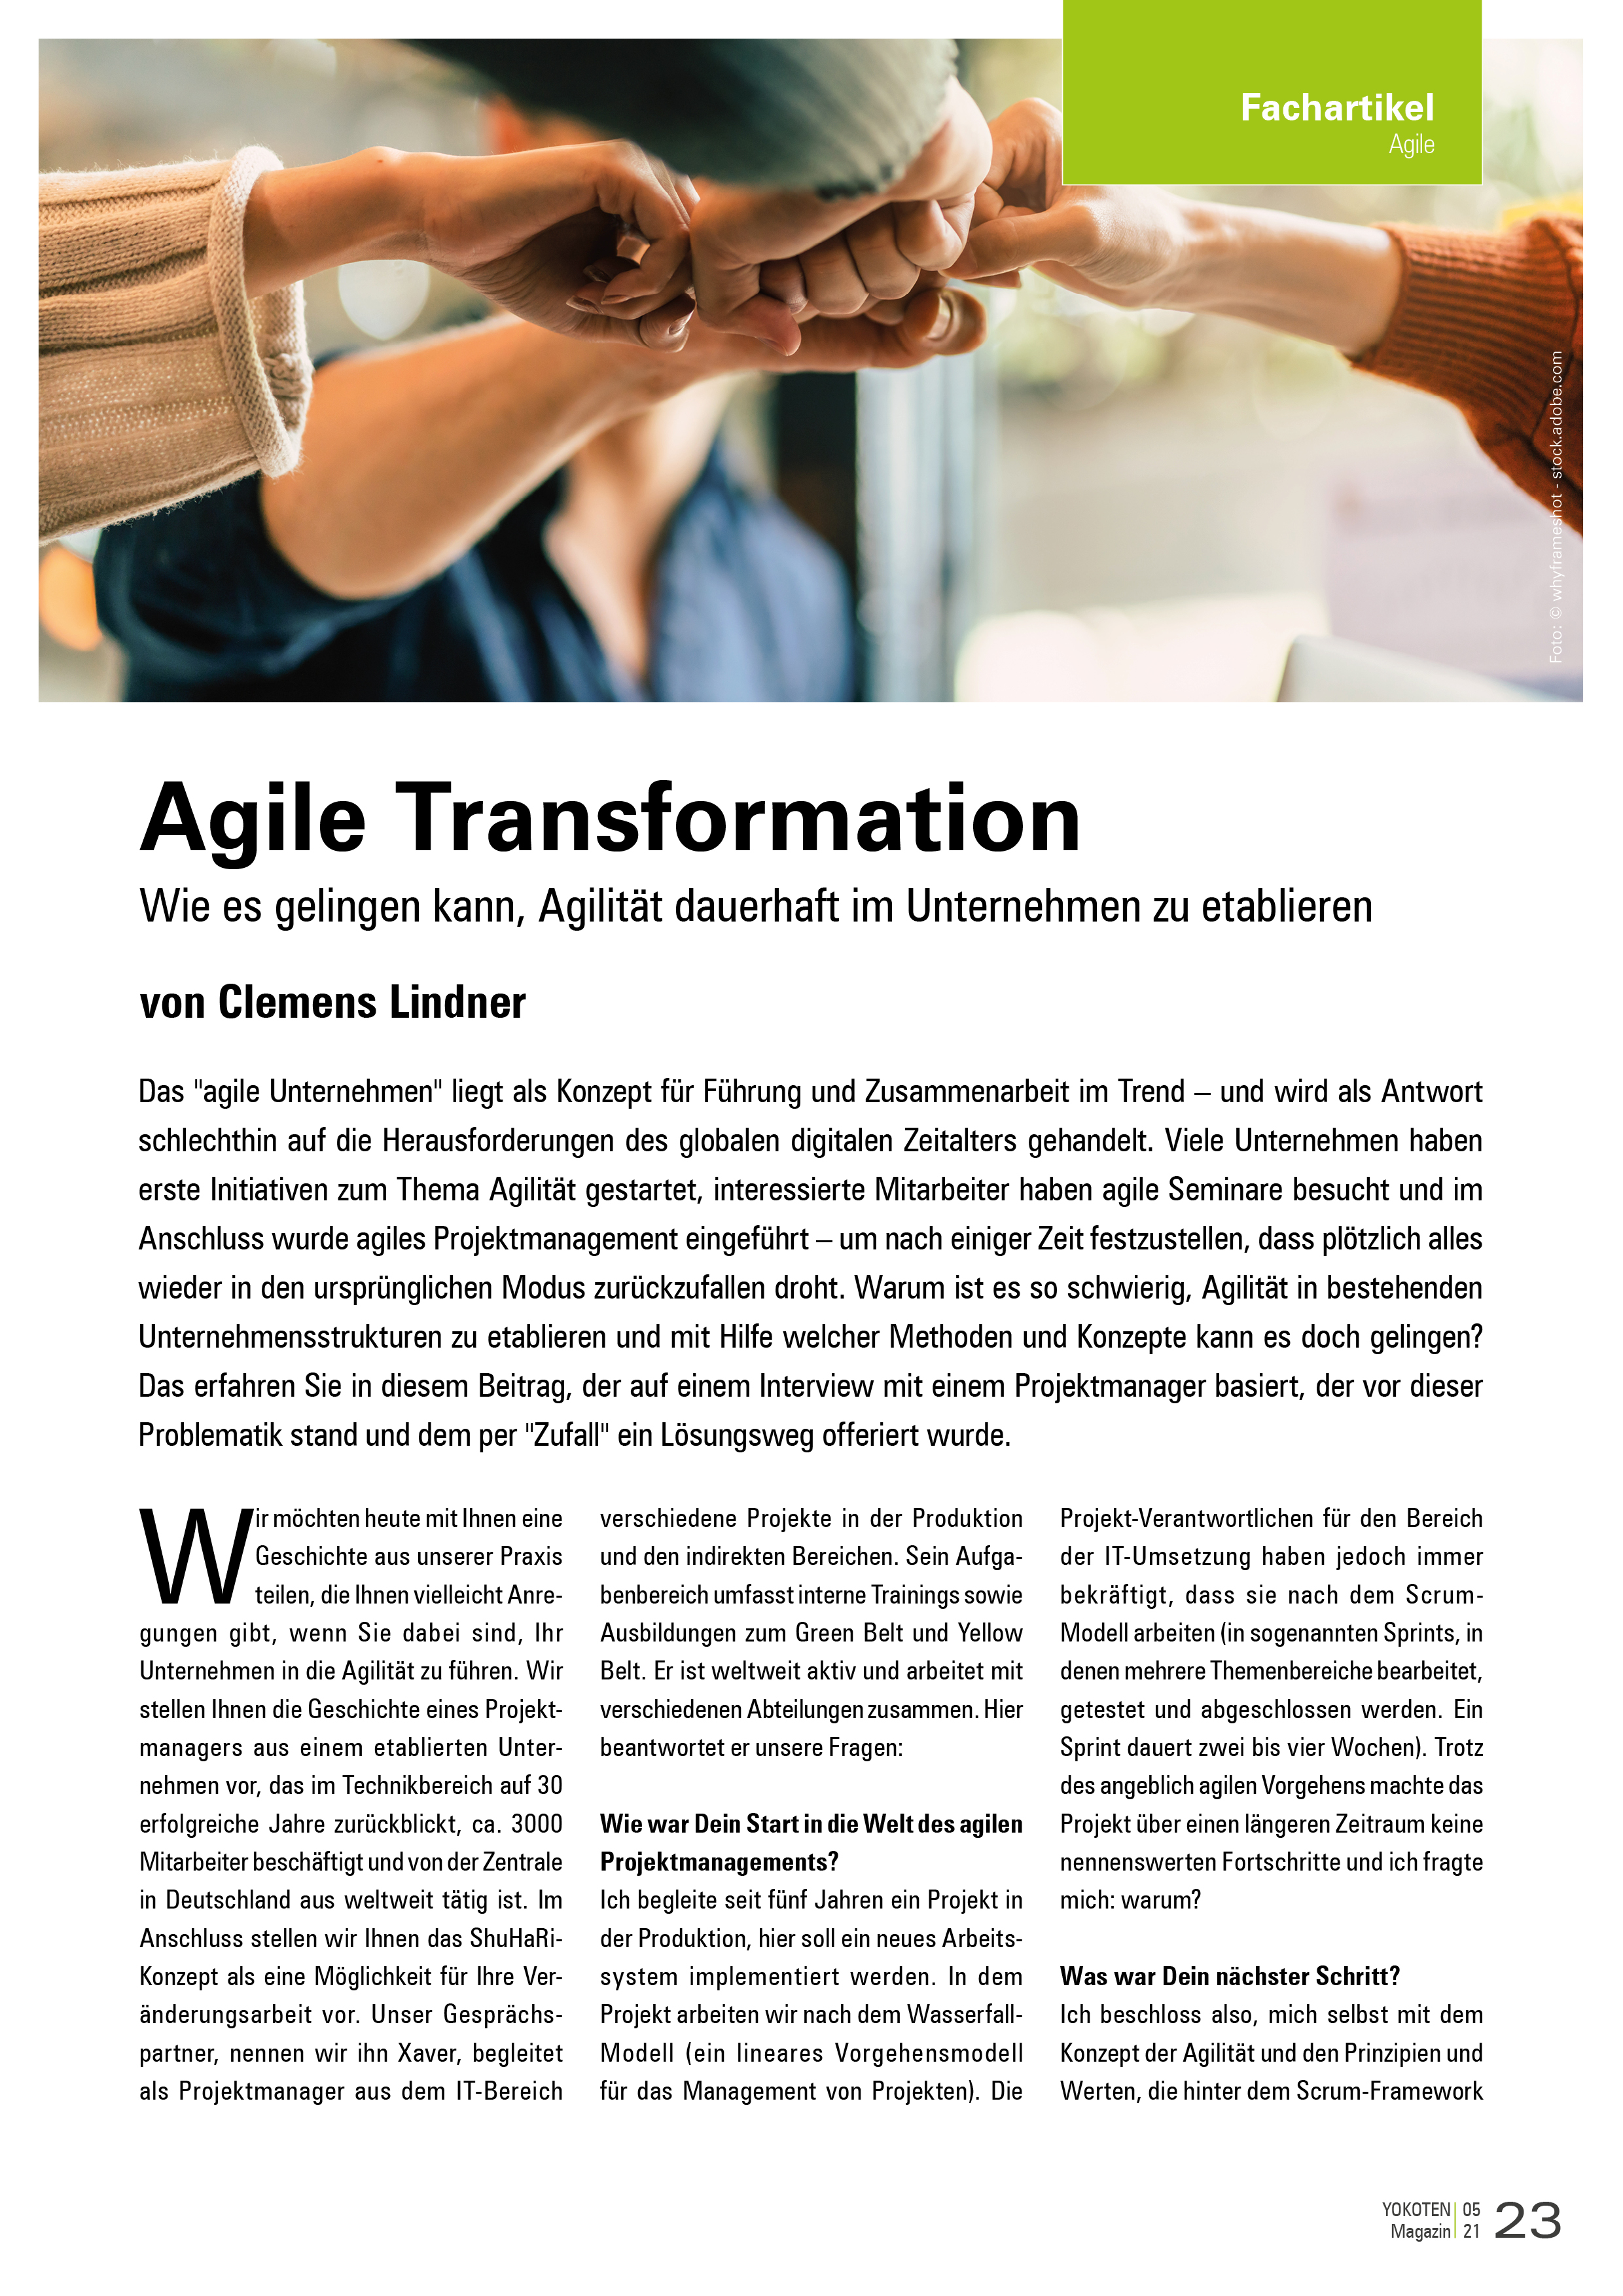 Agile Transformation - Artikel aus Fachmagazin YOKOTEN 2021-05